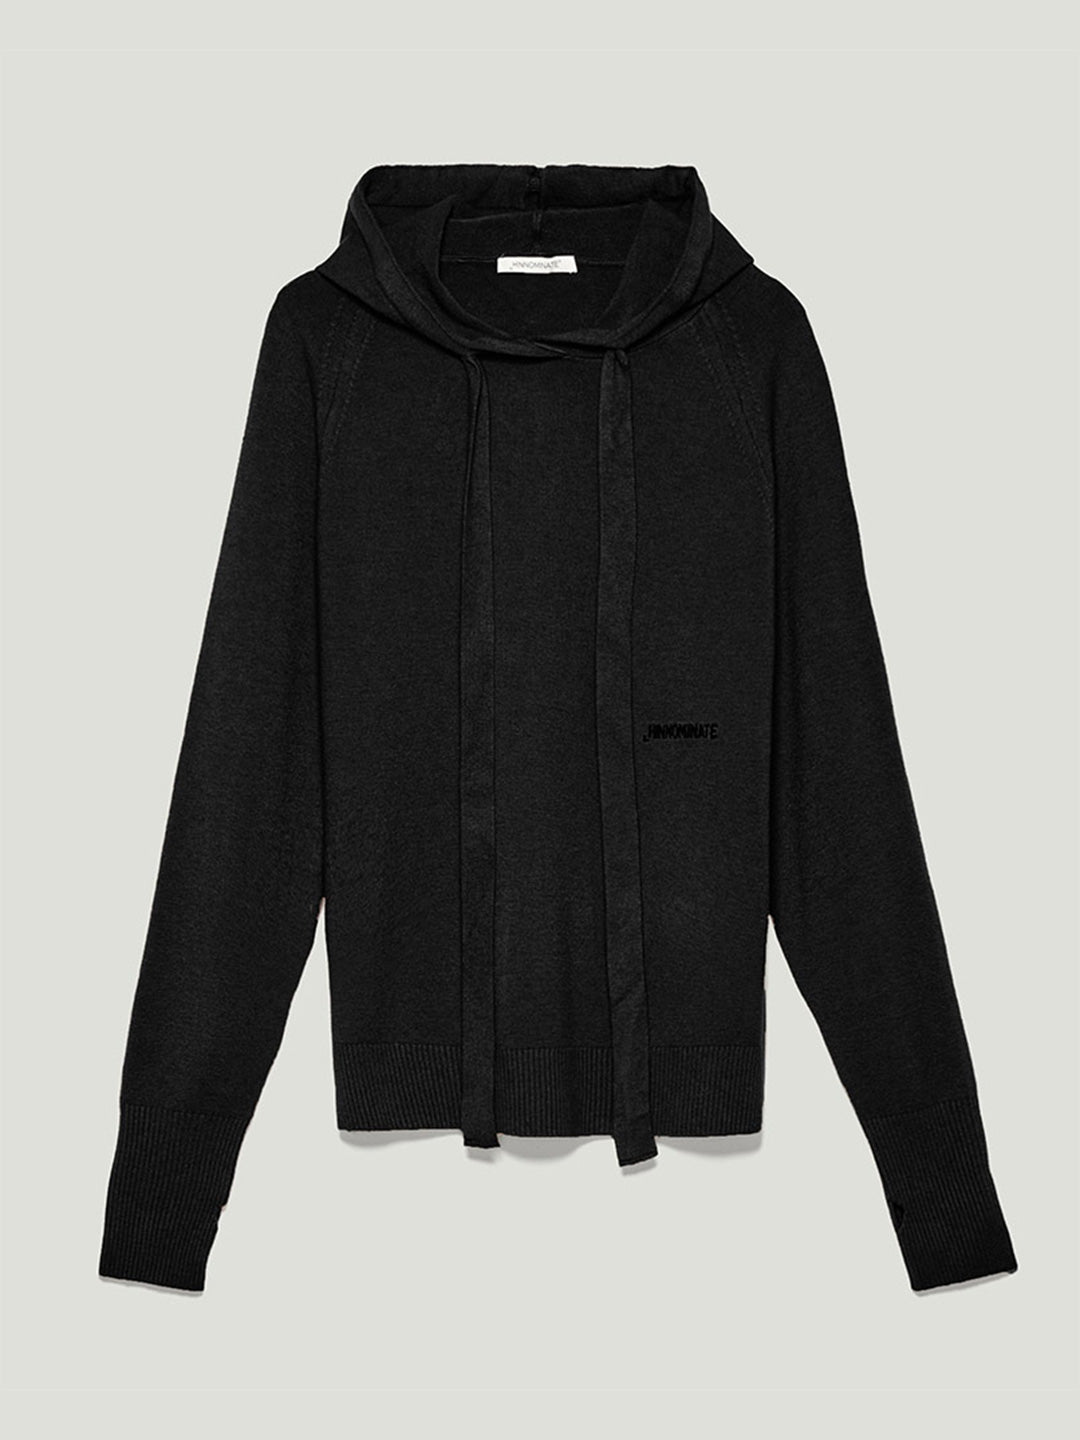 Hinnominate black hooded sweater